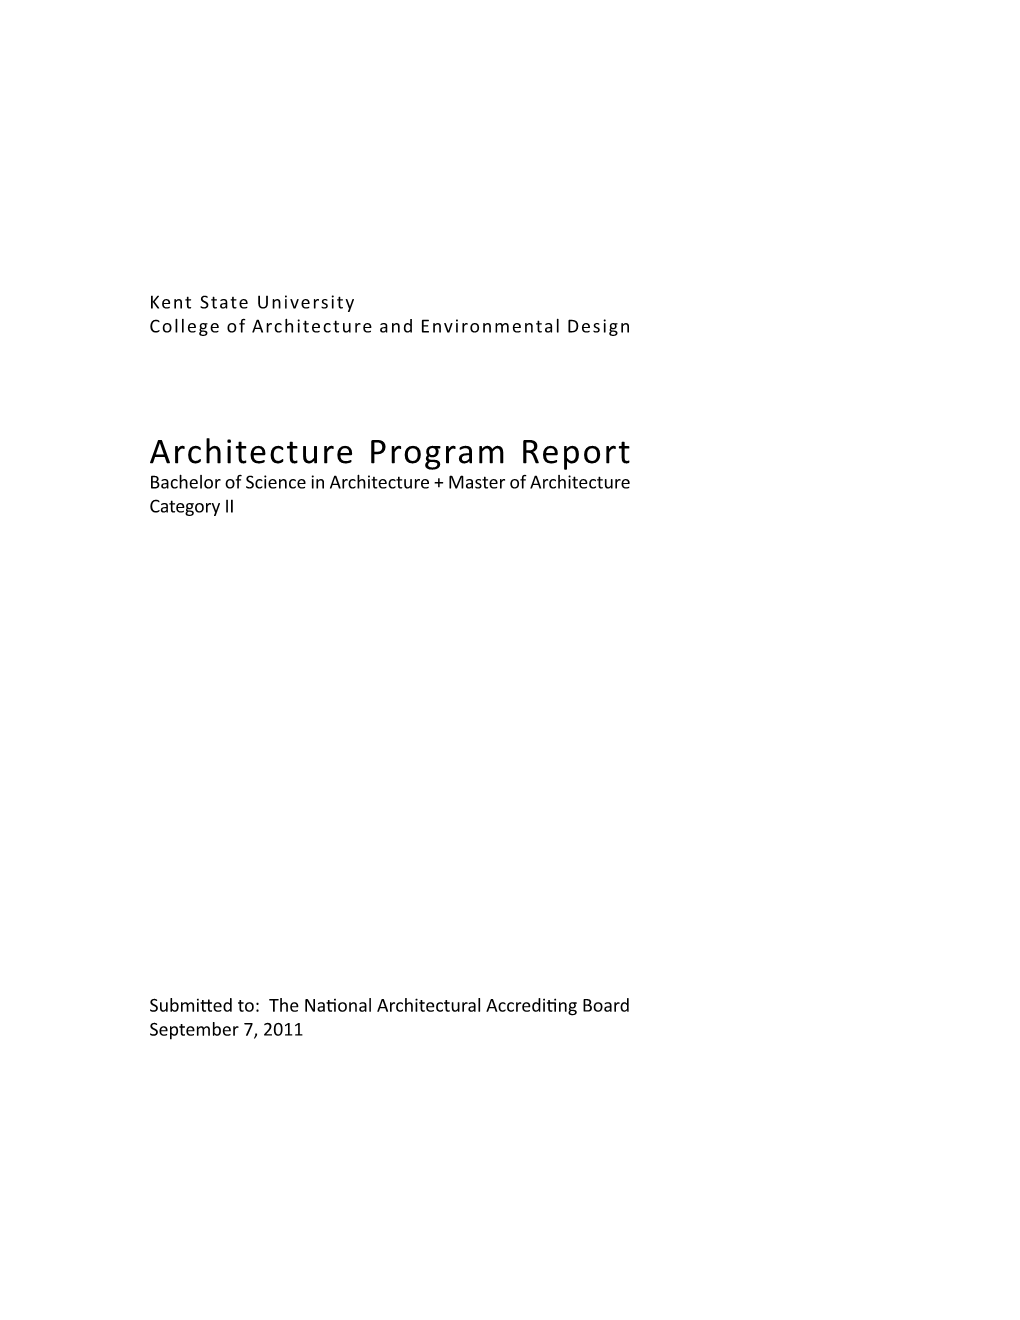 Architecture Program Report Bachelor of Science in Architecture + Master of Architecture Category II